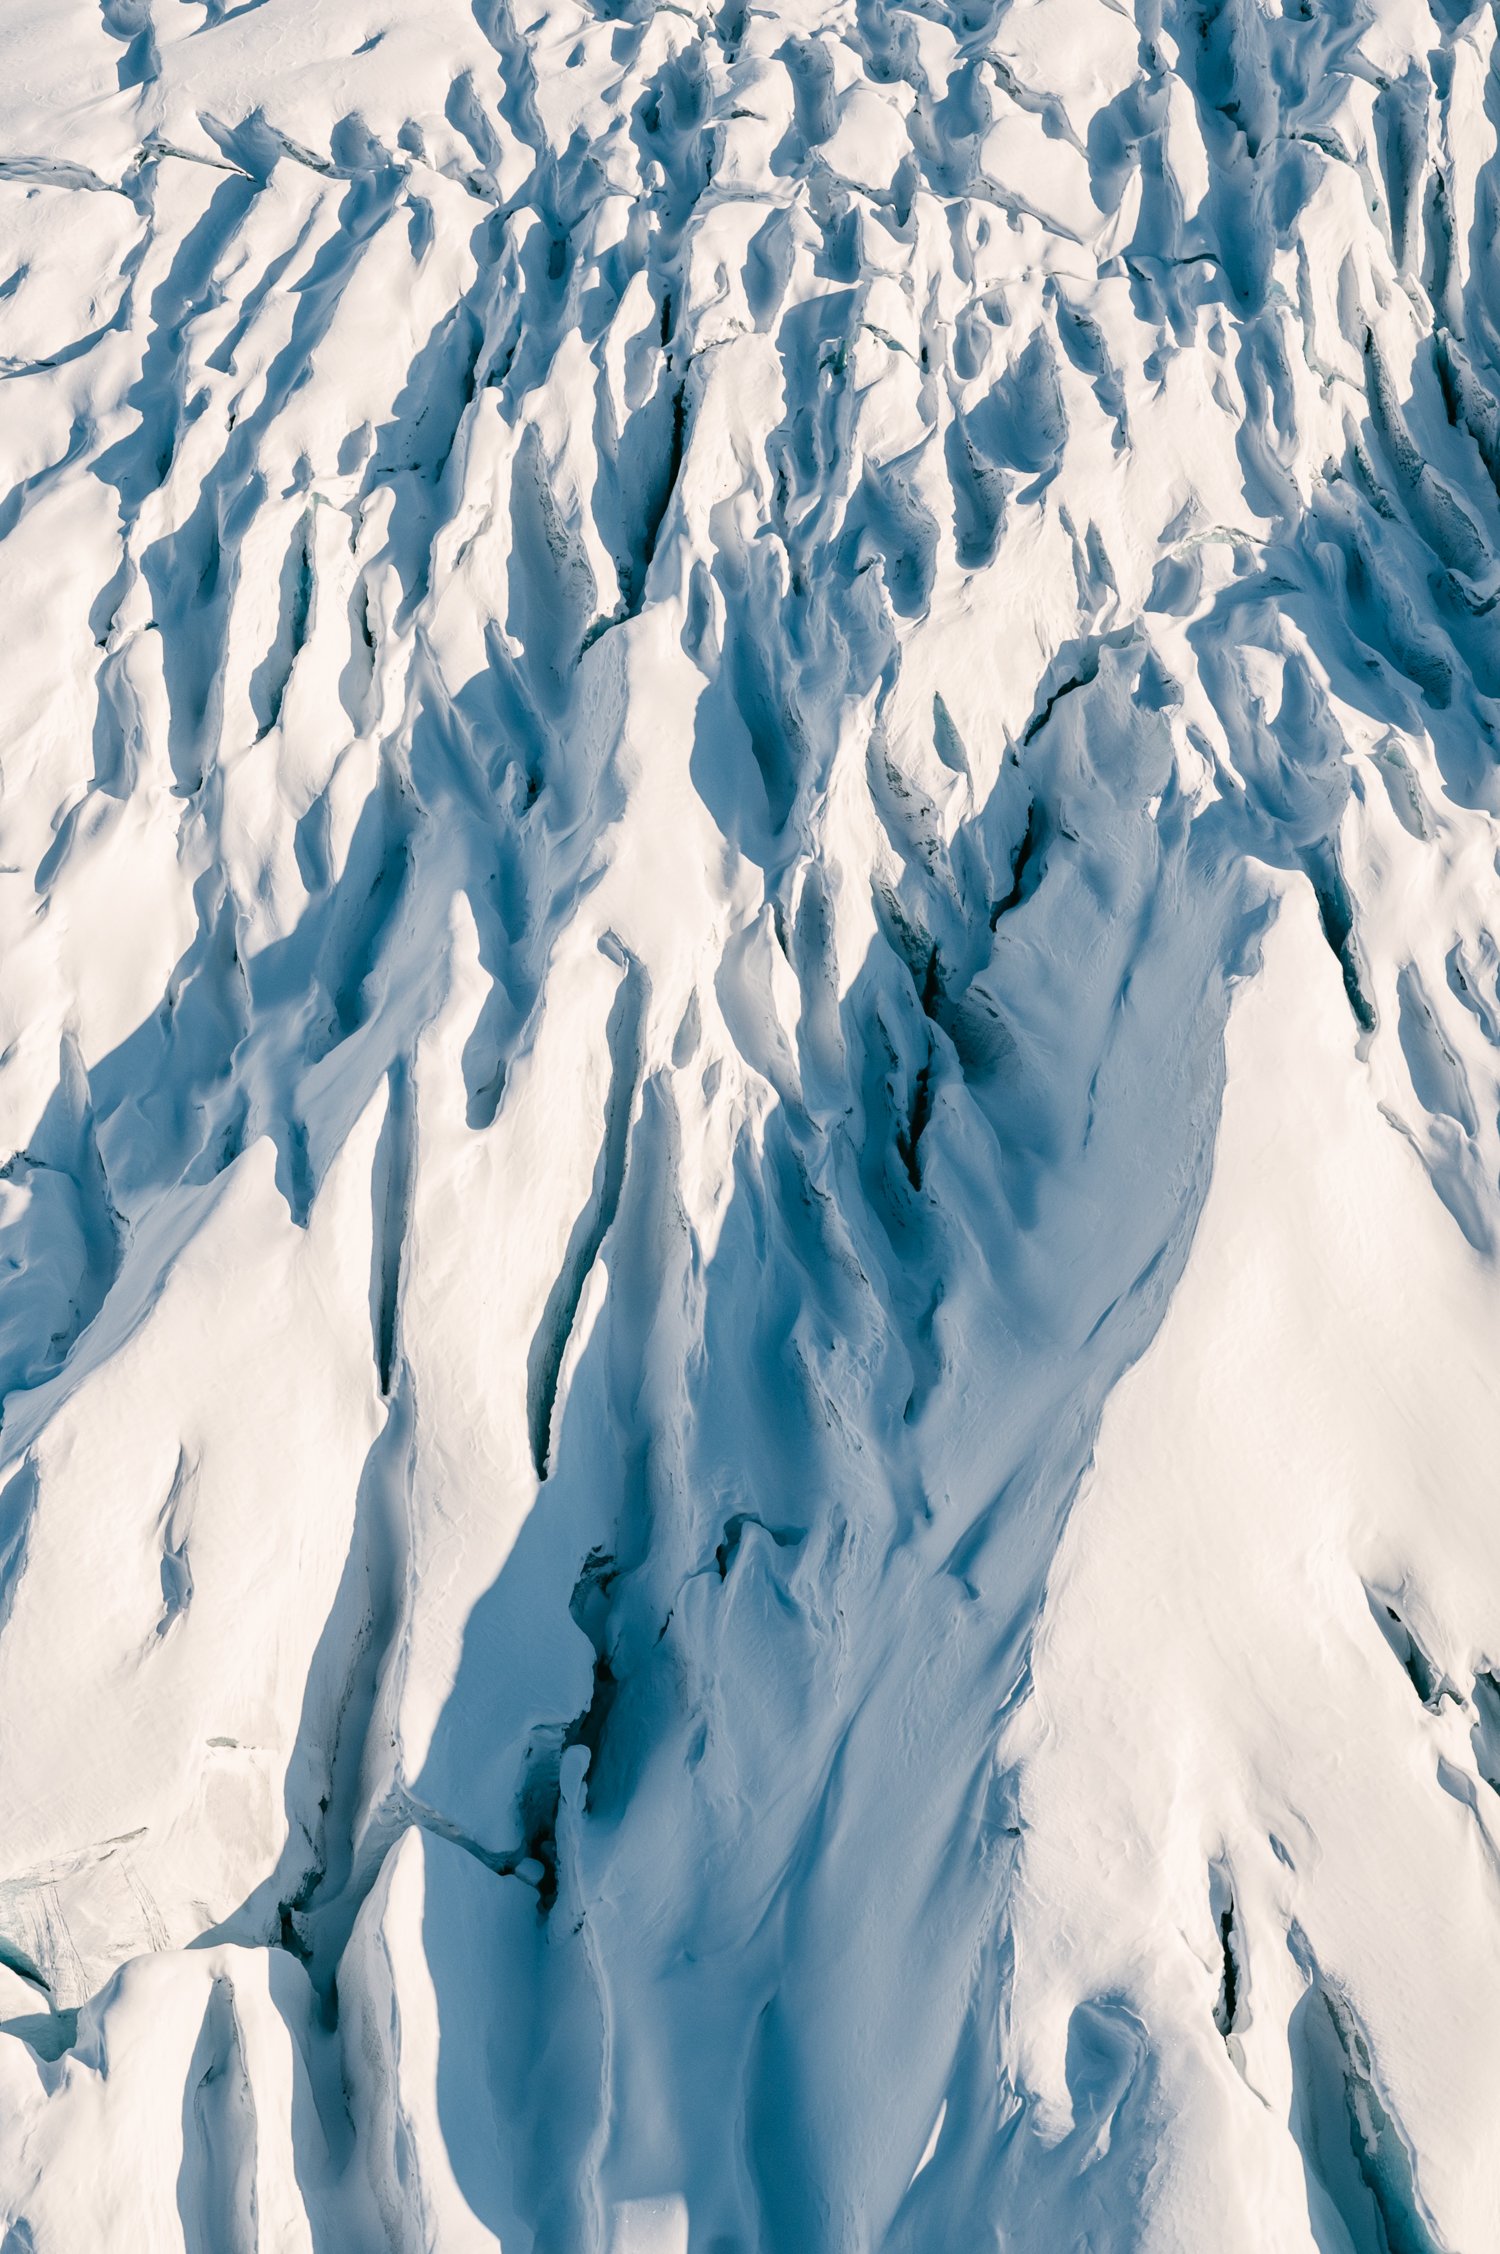 Girdwood Alaska helicopter elopement, photo of a glacier